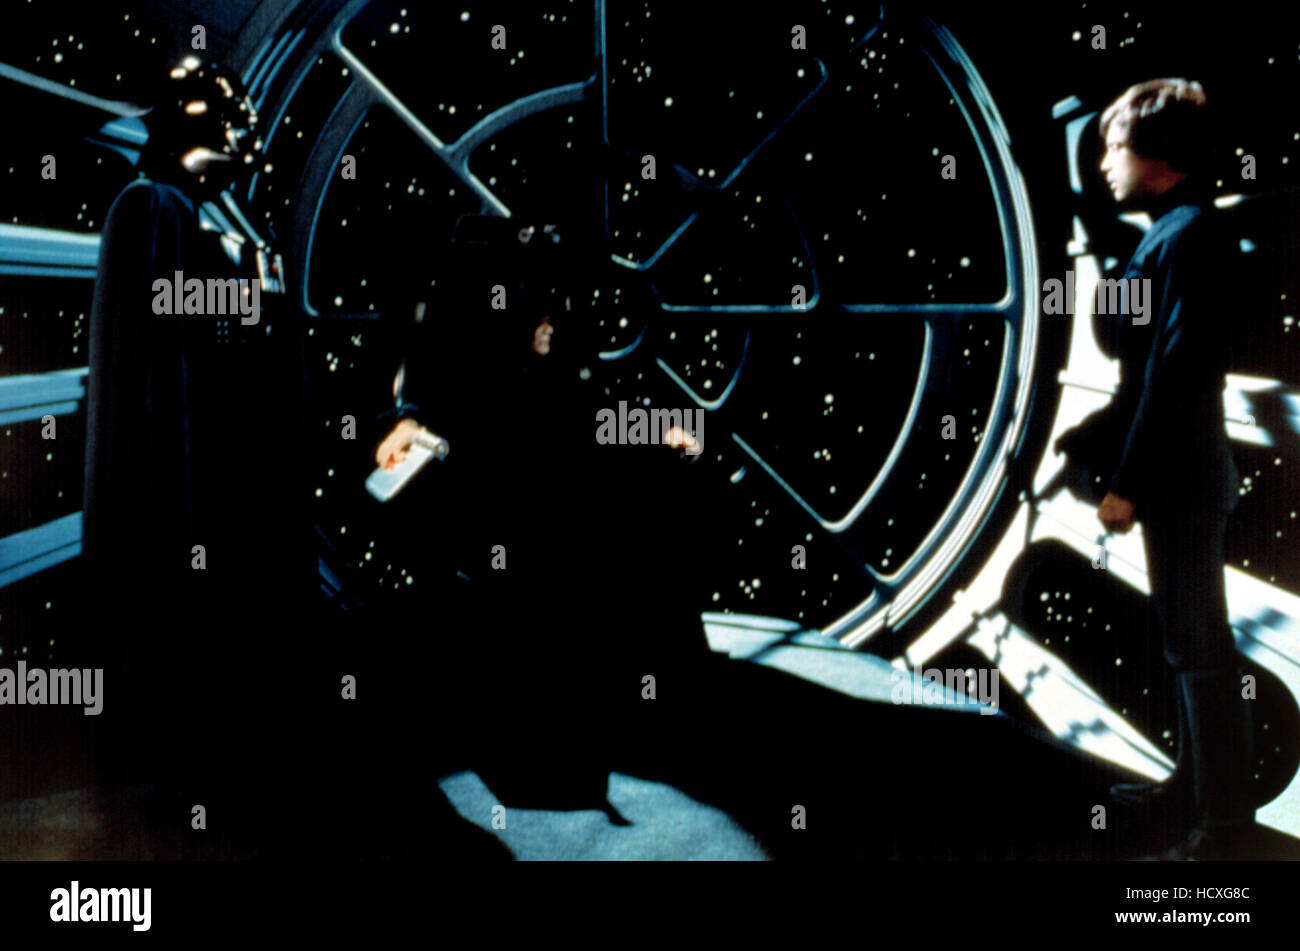 STAR WARS: EPISODE VI - RETURN OF THE JEDI, Darth Vader, Ian McDiarmid, Mark Hamill, 1983 Stock Photo